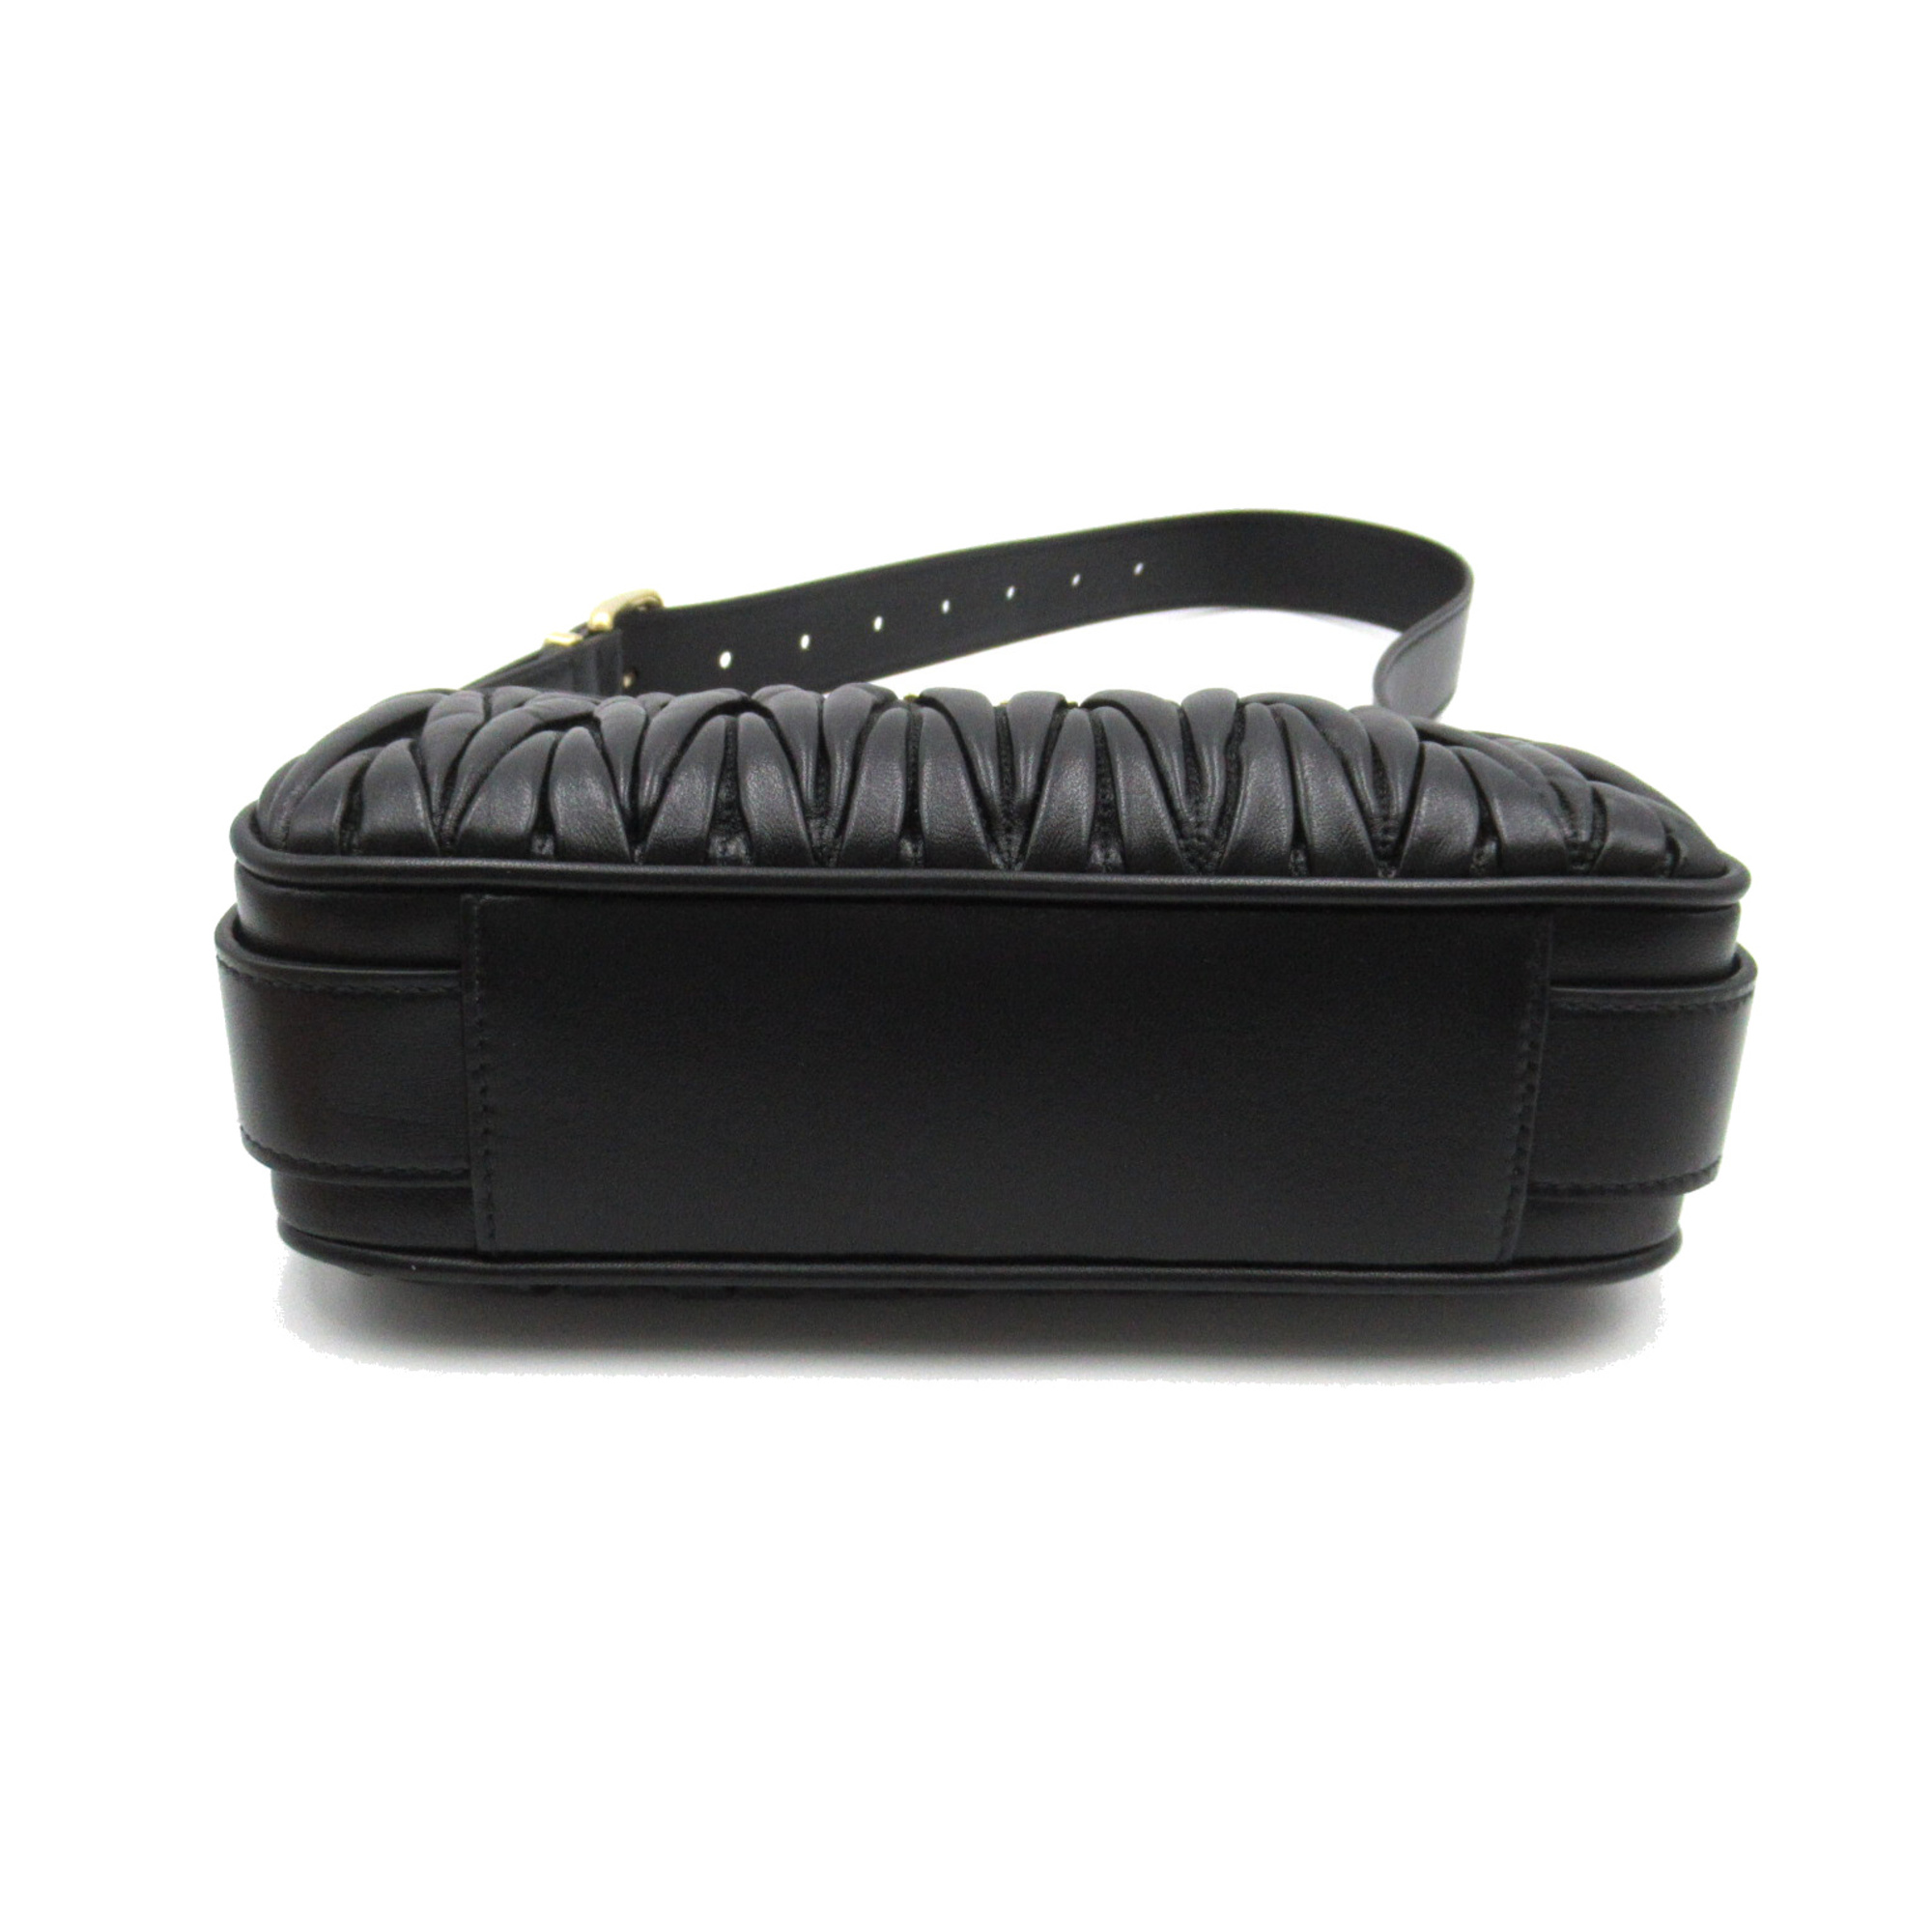 Miu Miu Shoulder Bag Black leather 5BC158N88F0002